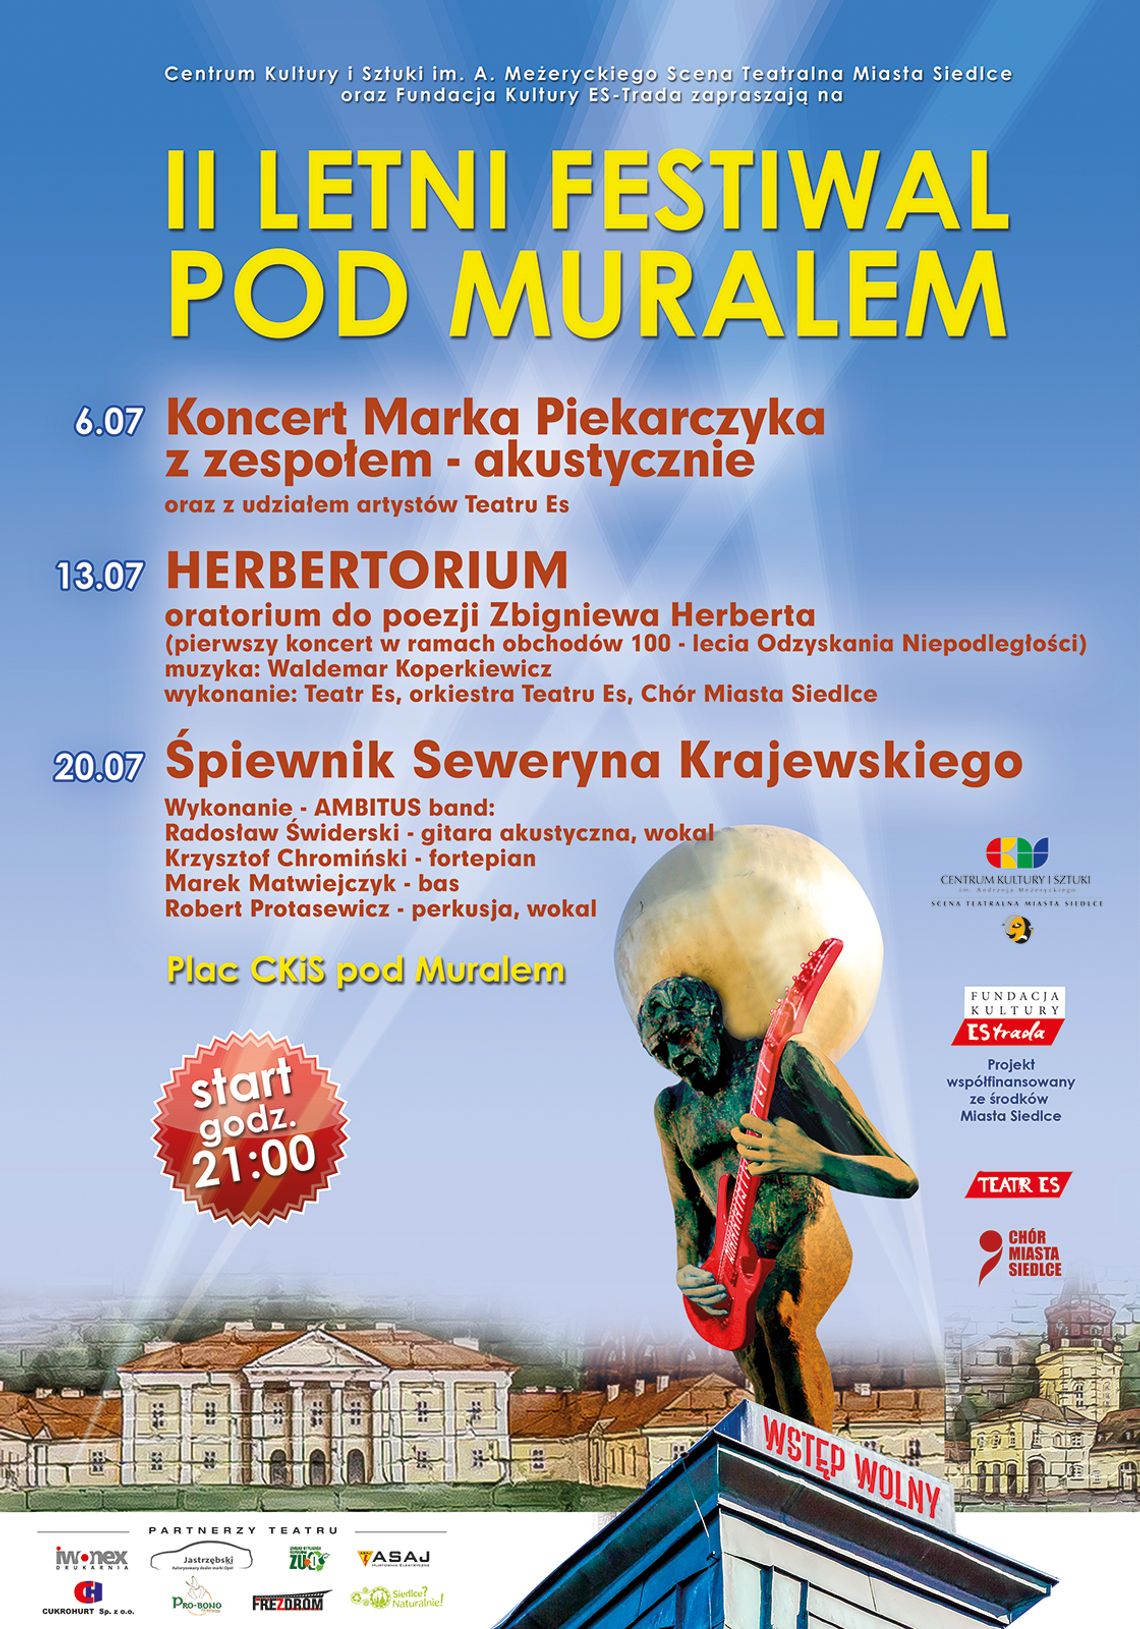 I Letni Festiwal pod Muralem